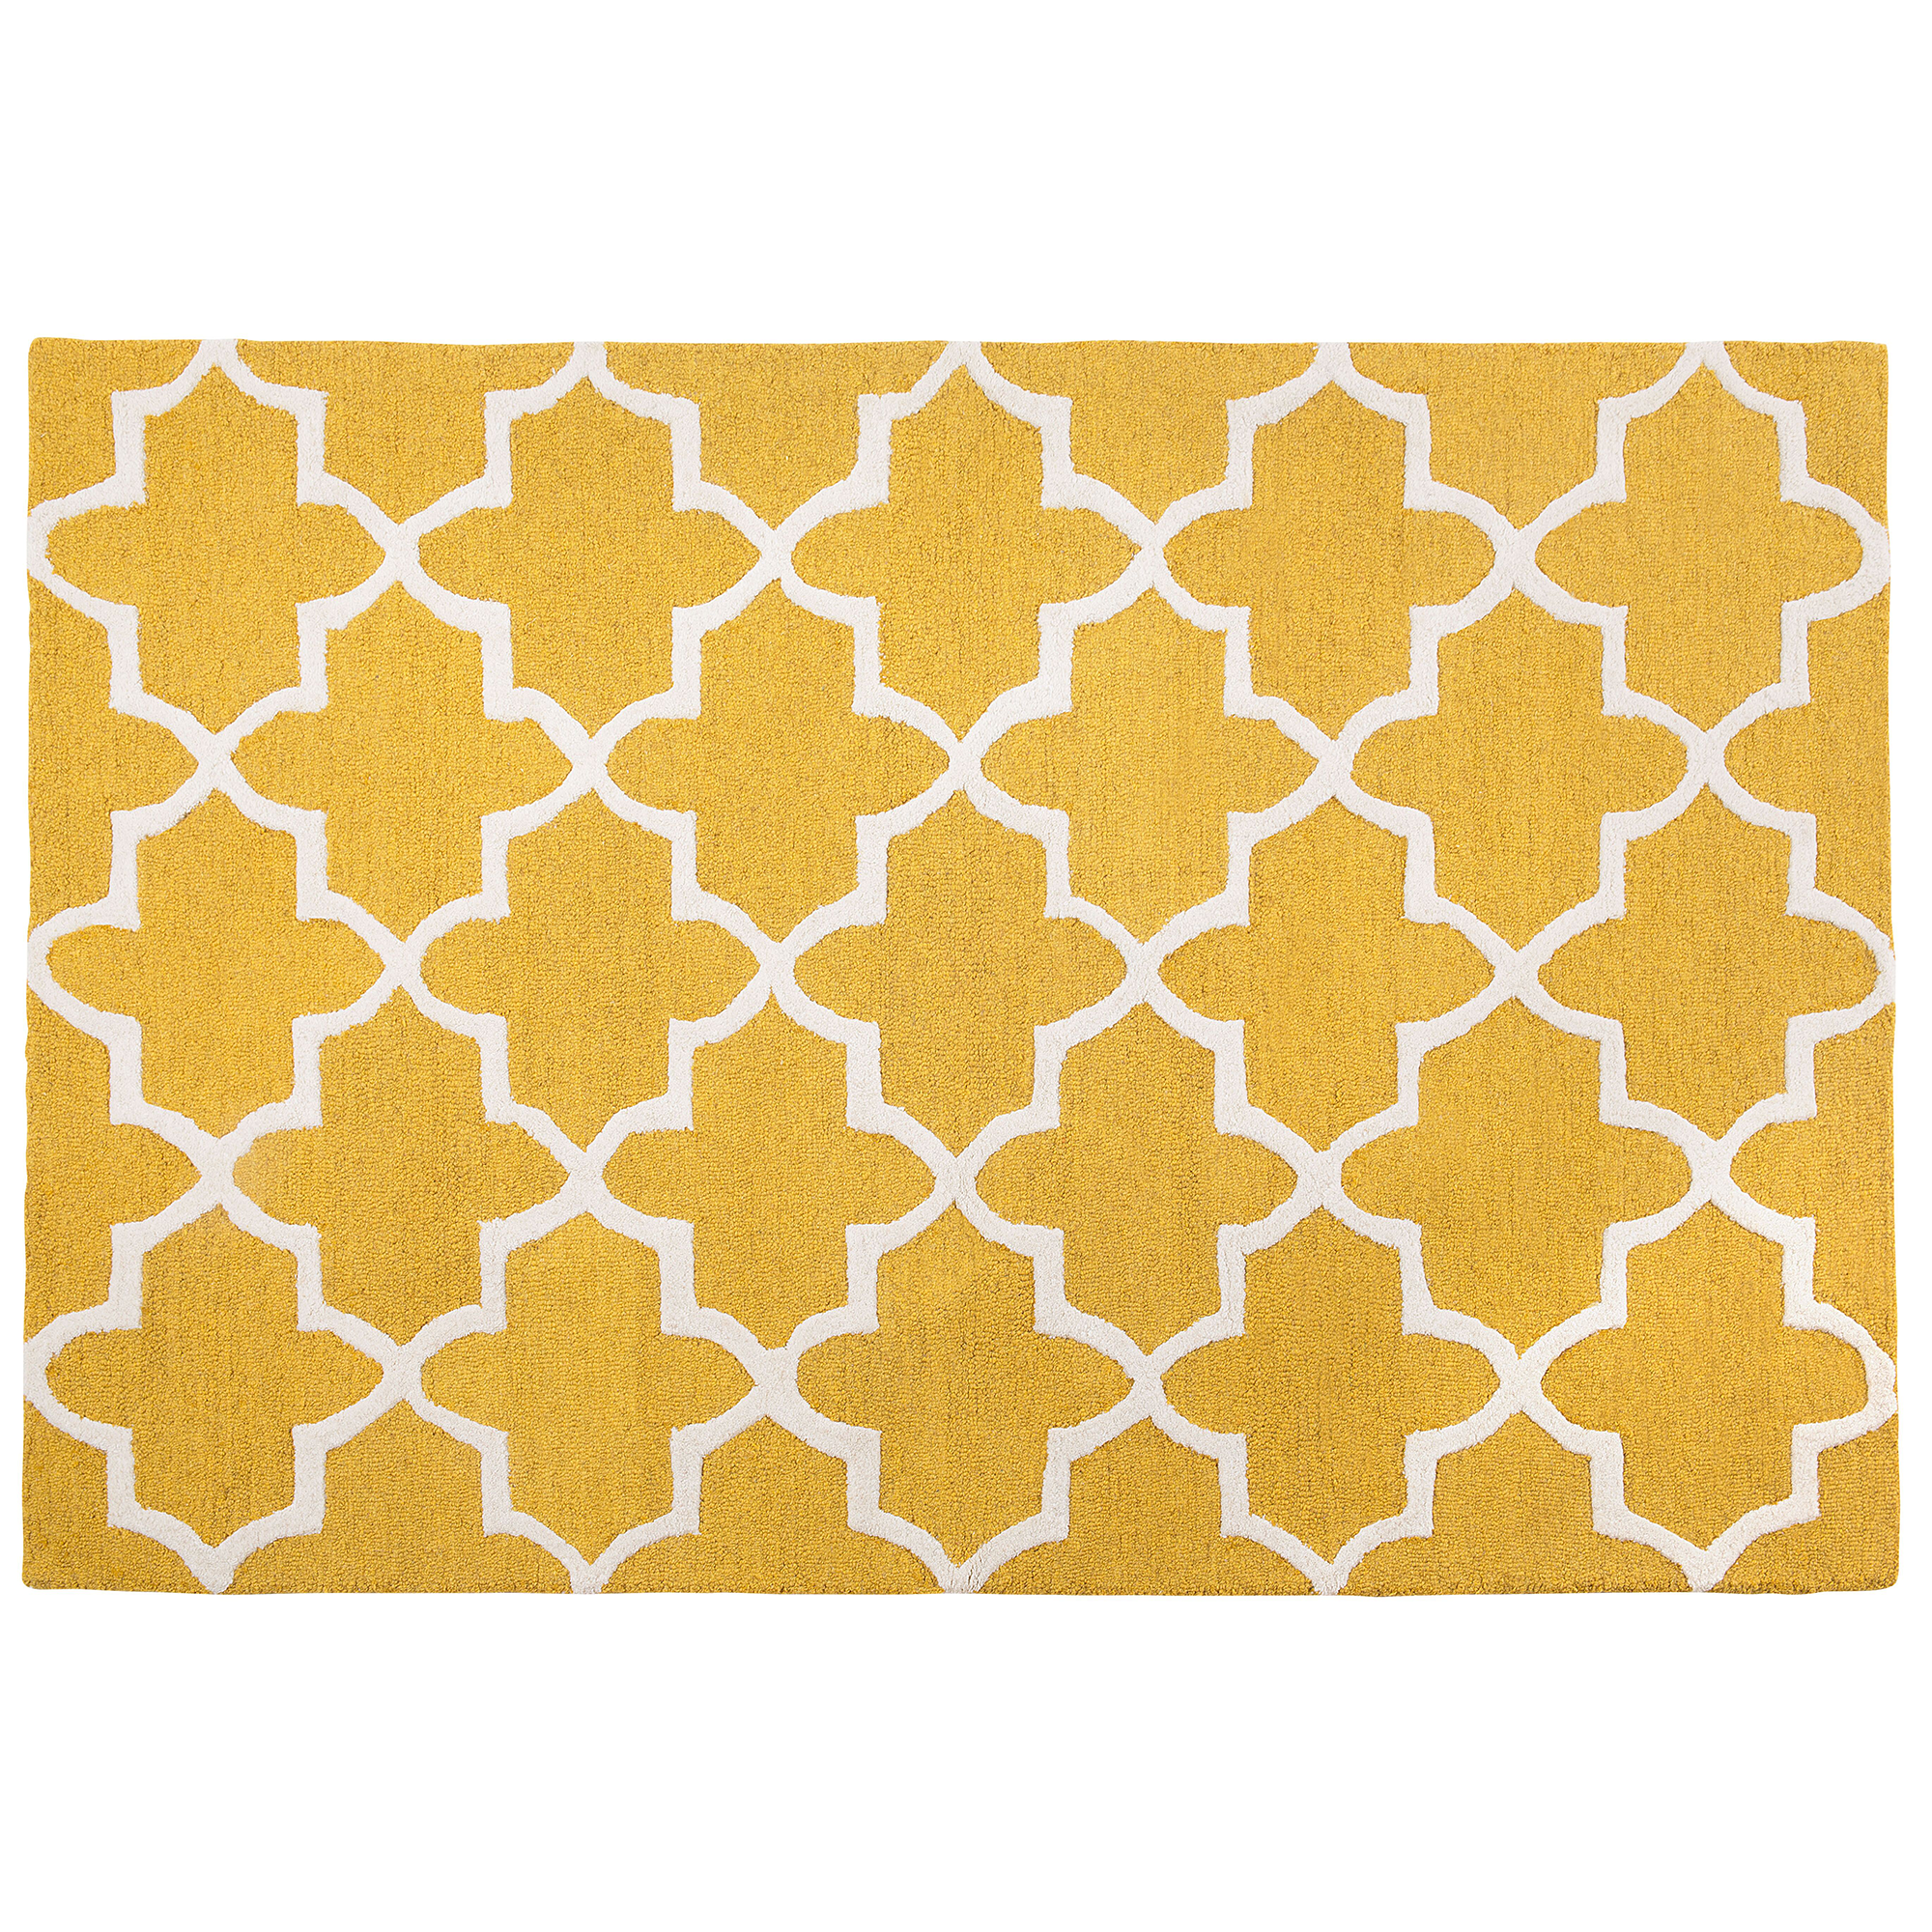 Beliani Area Rug Yellow Wool 160 x 230 cm Trellis Quatrefoil Pattern Hand Tufted Oriental Moroccan Clover